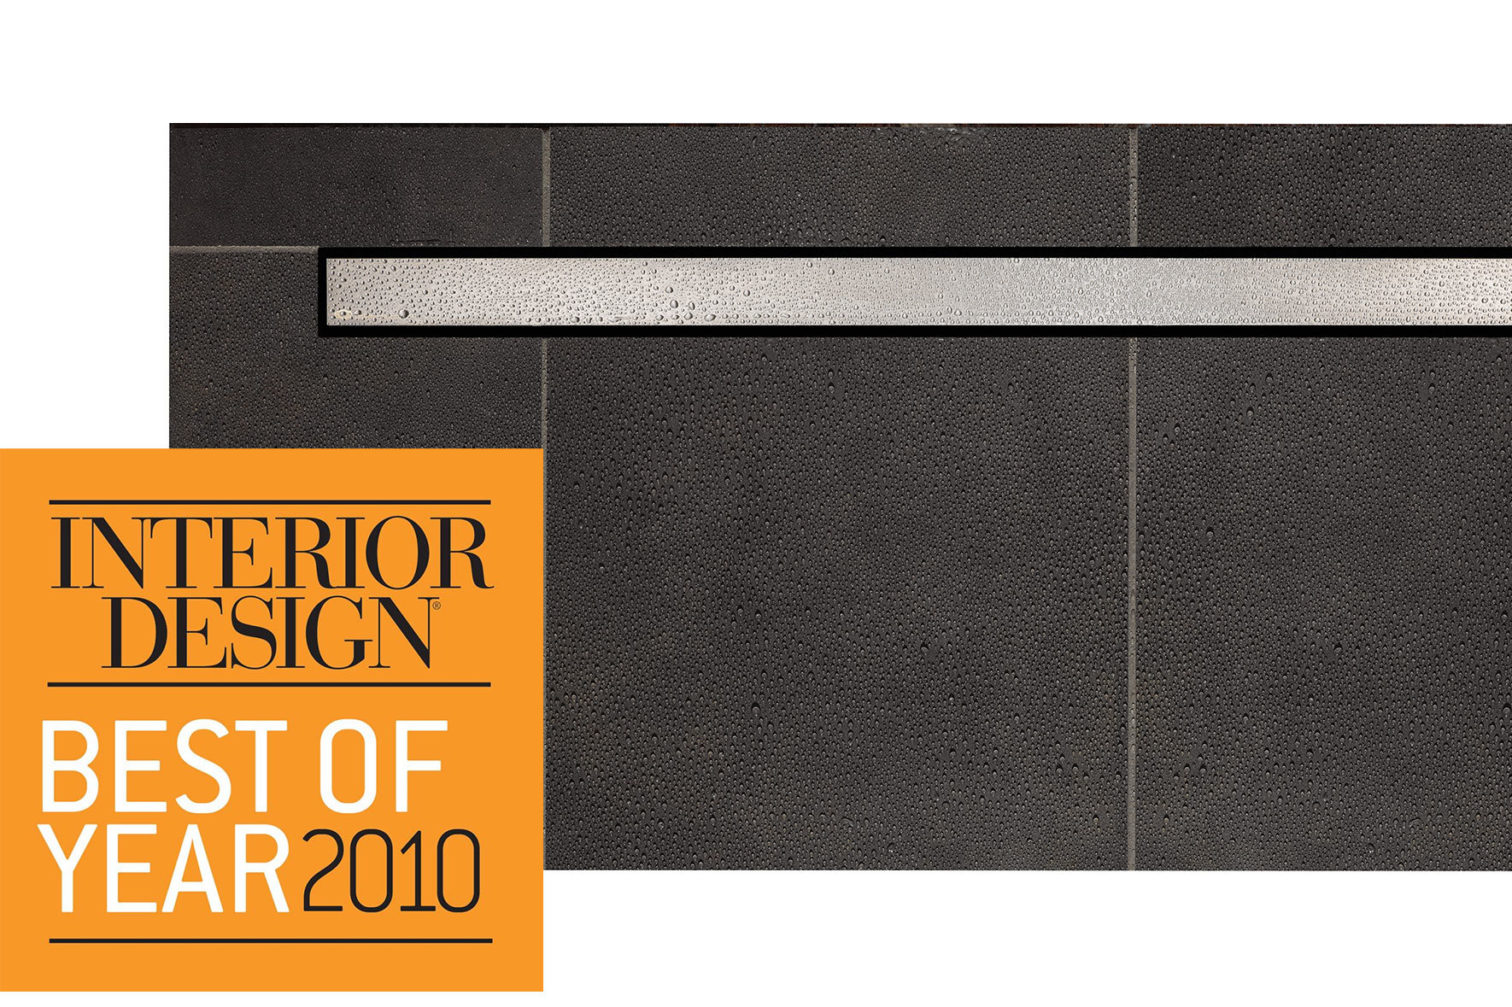 Interior Design Best of Year logo overlay on Ceraline drain